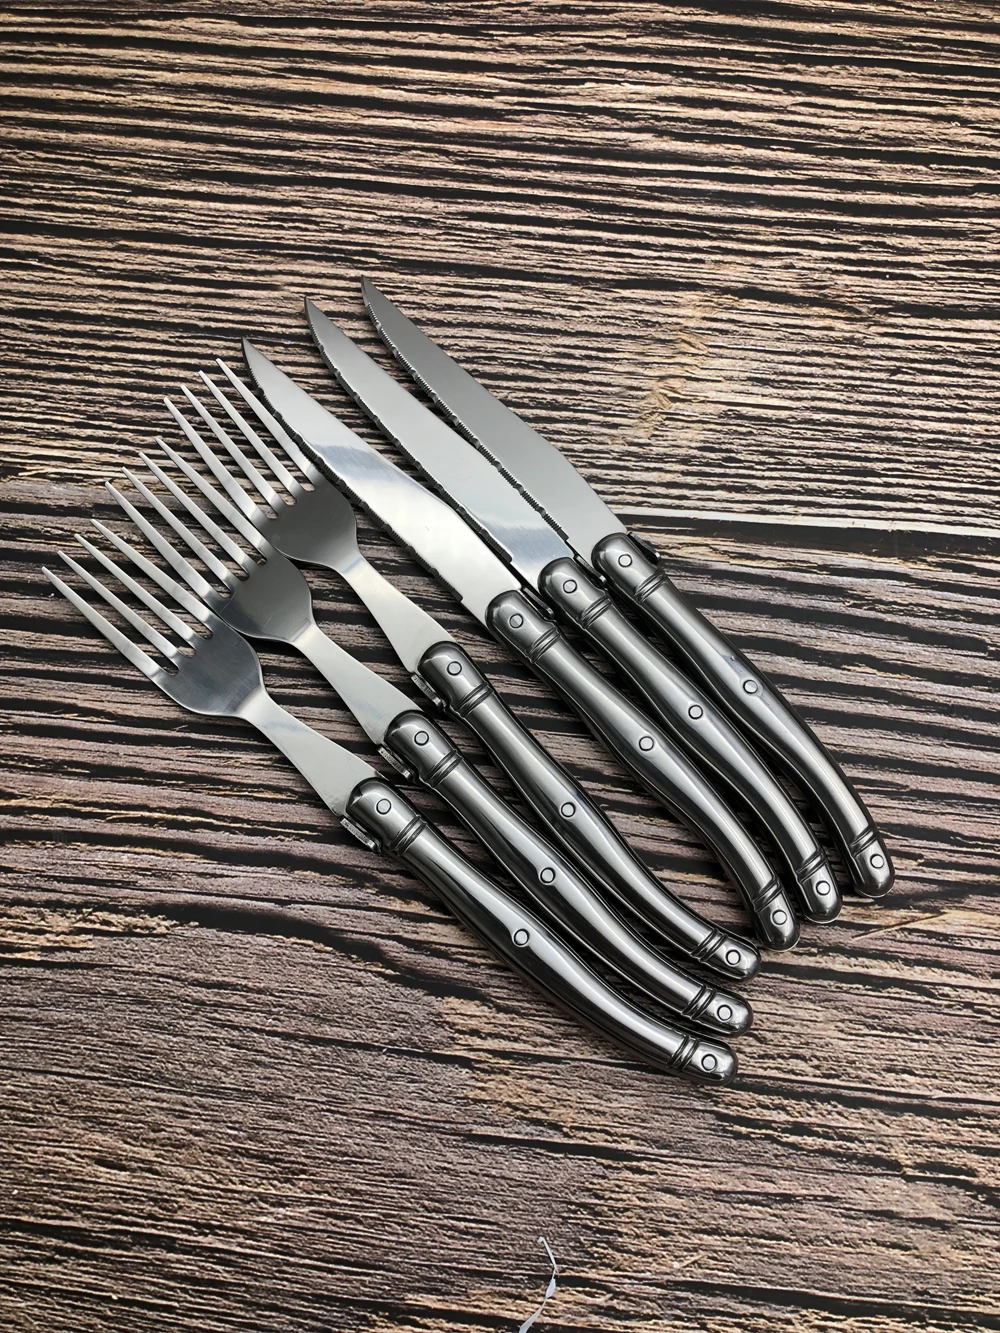 https://ae01.alicdn.com/kf/H4ce99b52434e45be8da693ab4c259d16d/Jaswehome-laguiole-style-stainless-steel-steak-knife-and-fork-set-tableware-knife-fork-christmas-3pcs-knives.jpg